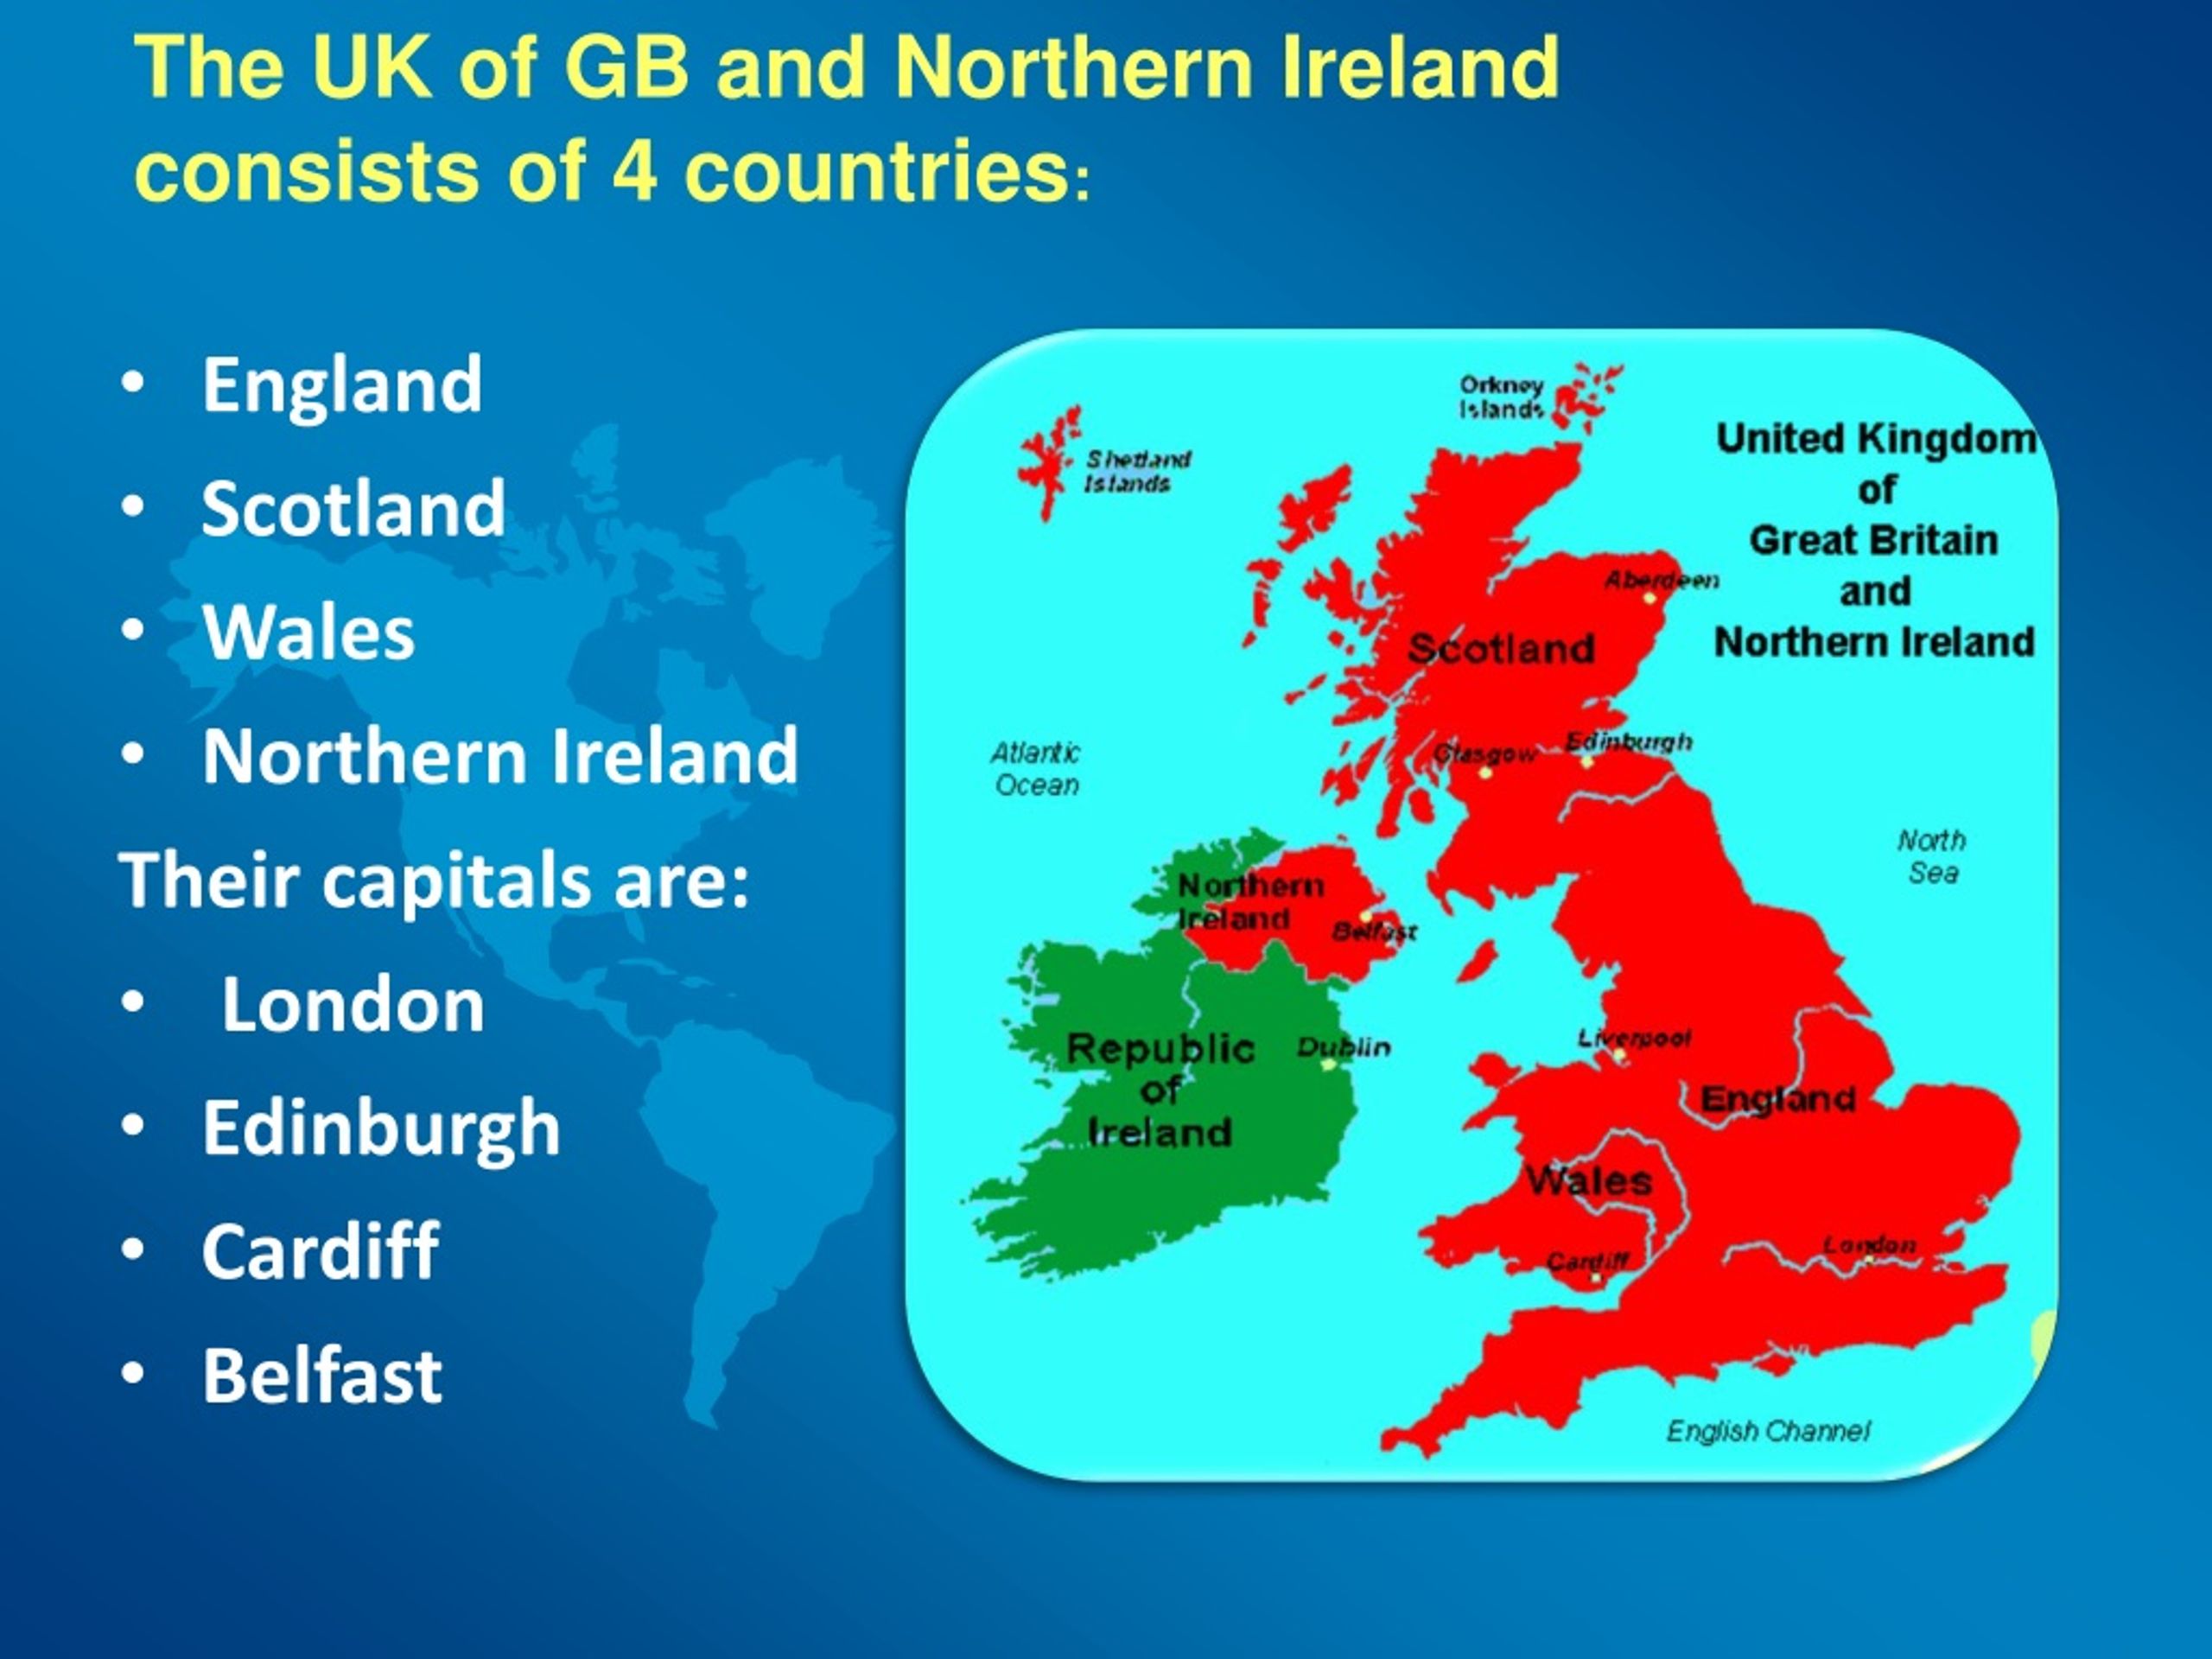 The smallest island is great britain. England, Scotland, Wales and Northern Ireland на карте. Uk great Britain. Соединенное королевство Великобритании и Северной Ирландии. Столицы Англии Шотландии Уэльса и Северной Ирландии.